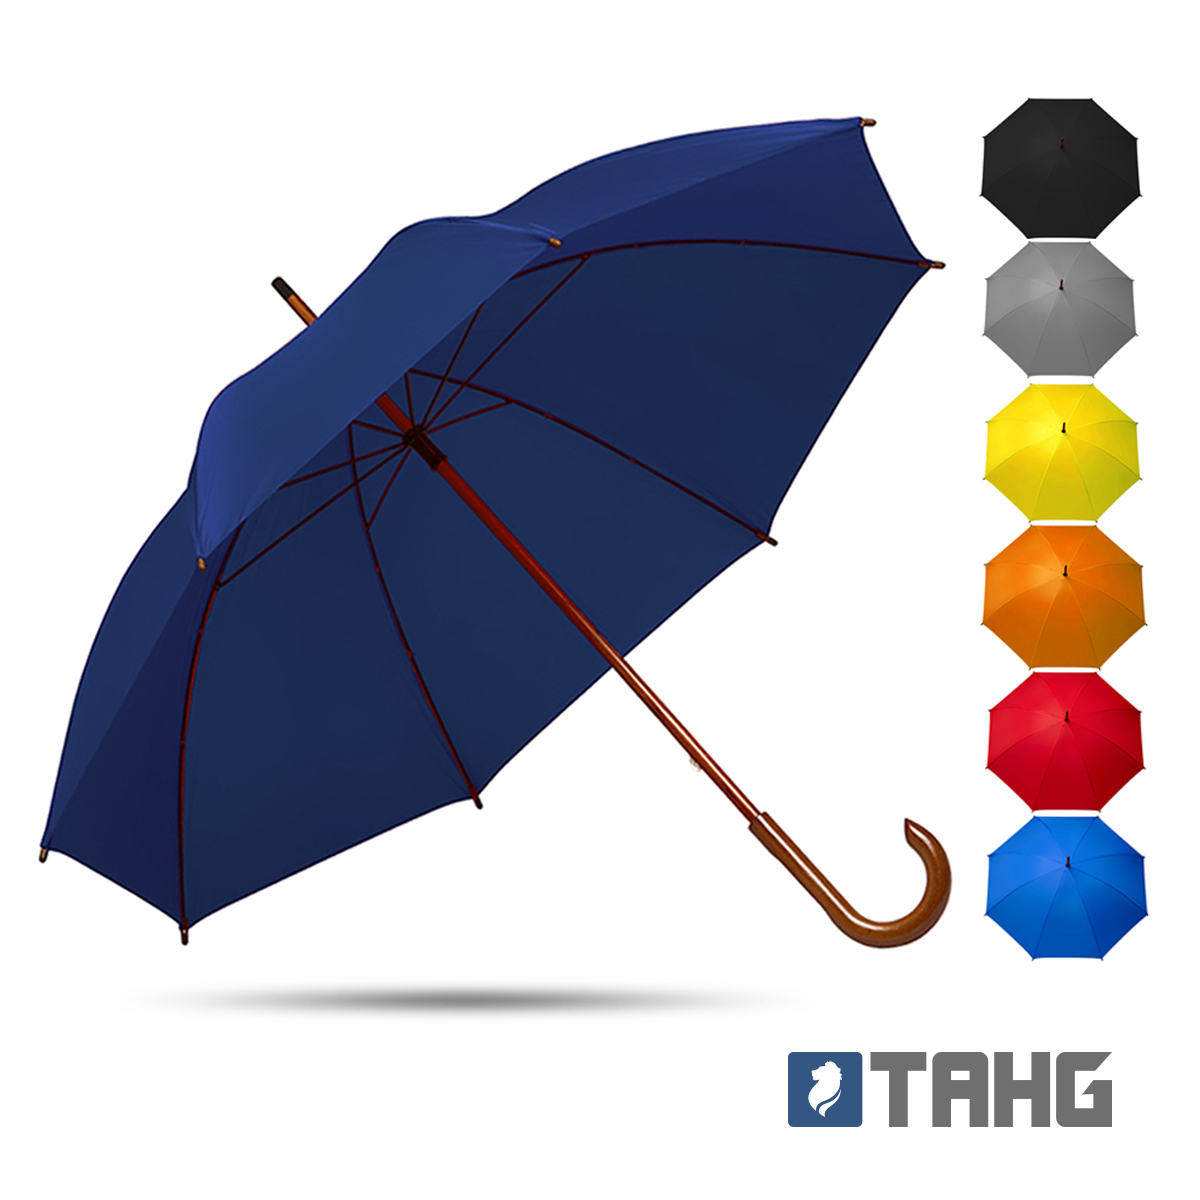 Paraguas TAHG 133